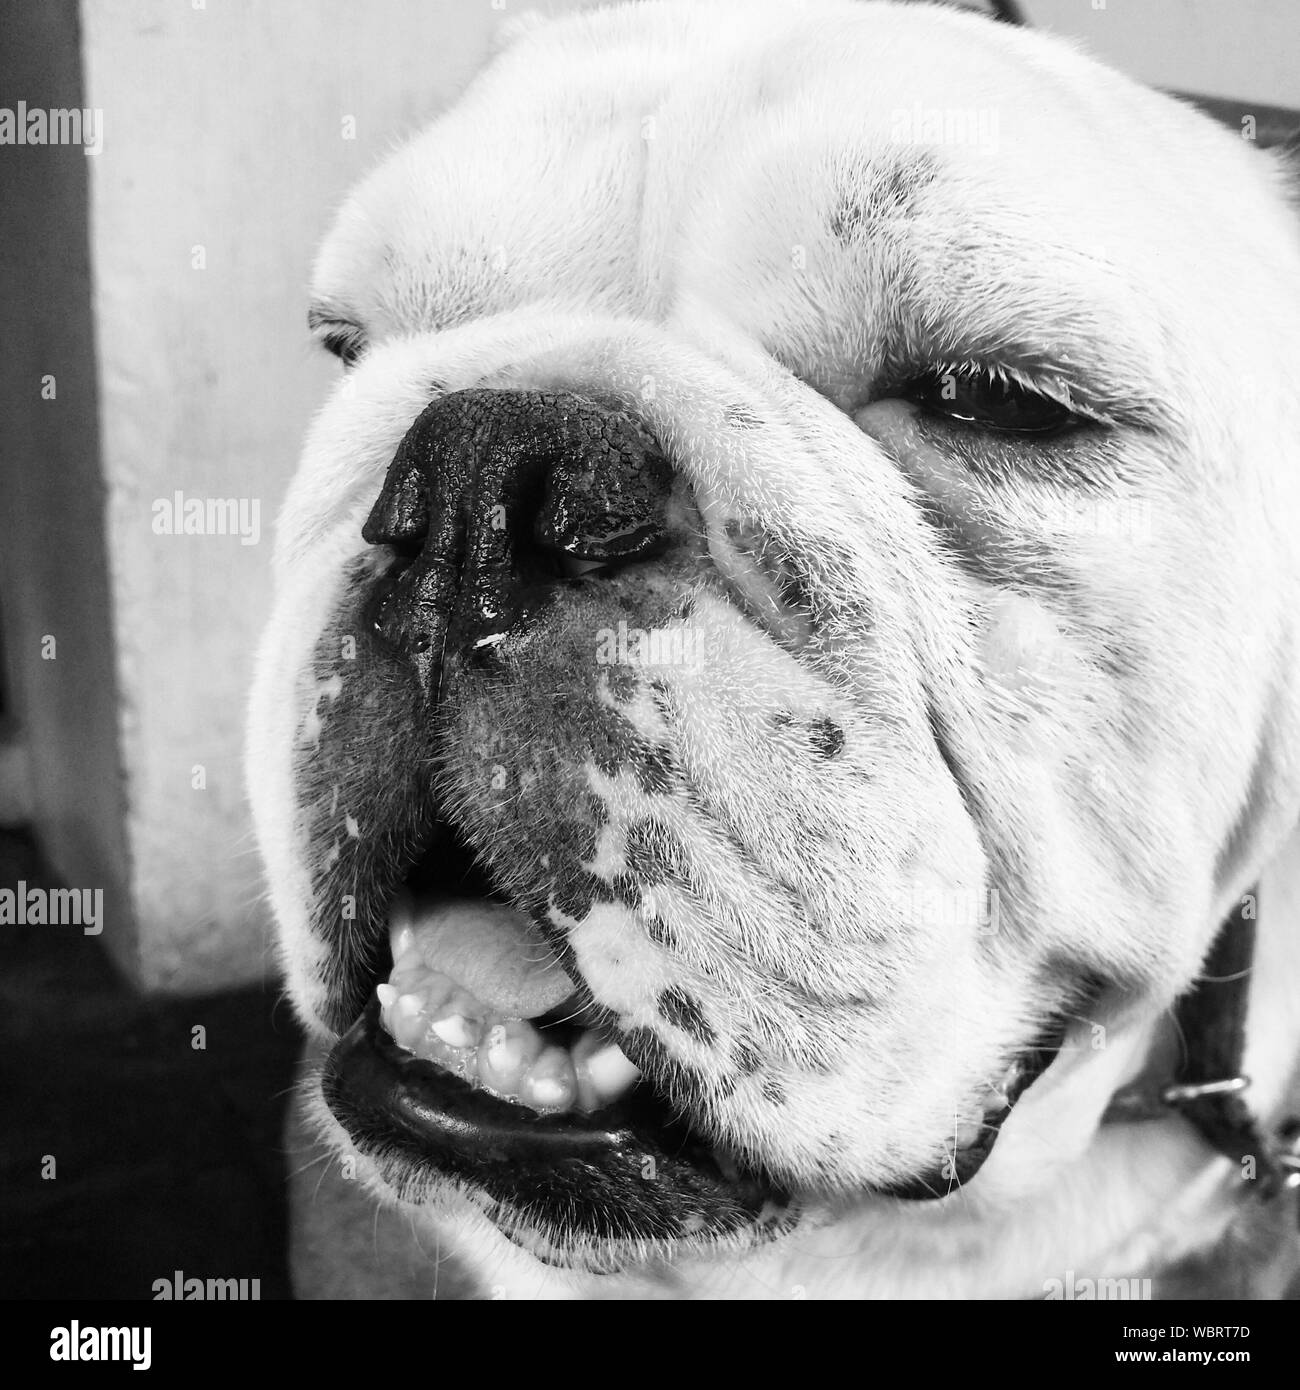 English Bulldog Black and White Stock Photos & Images - Alamy